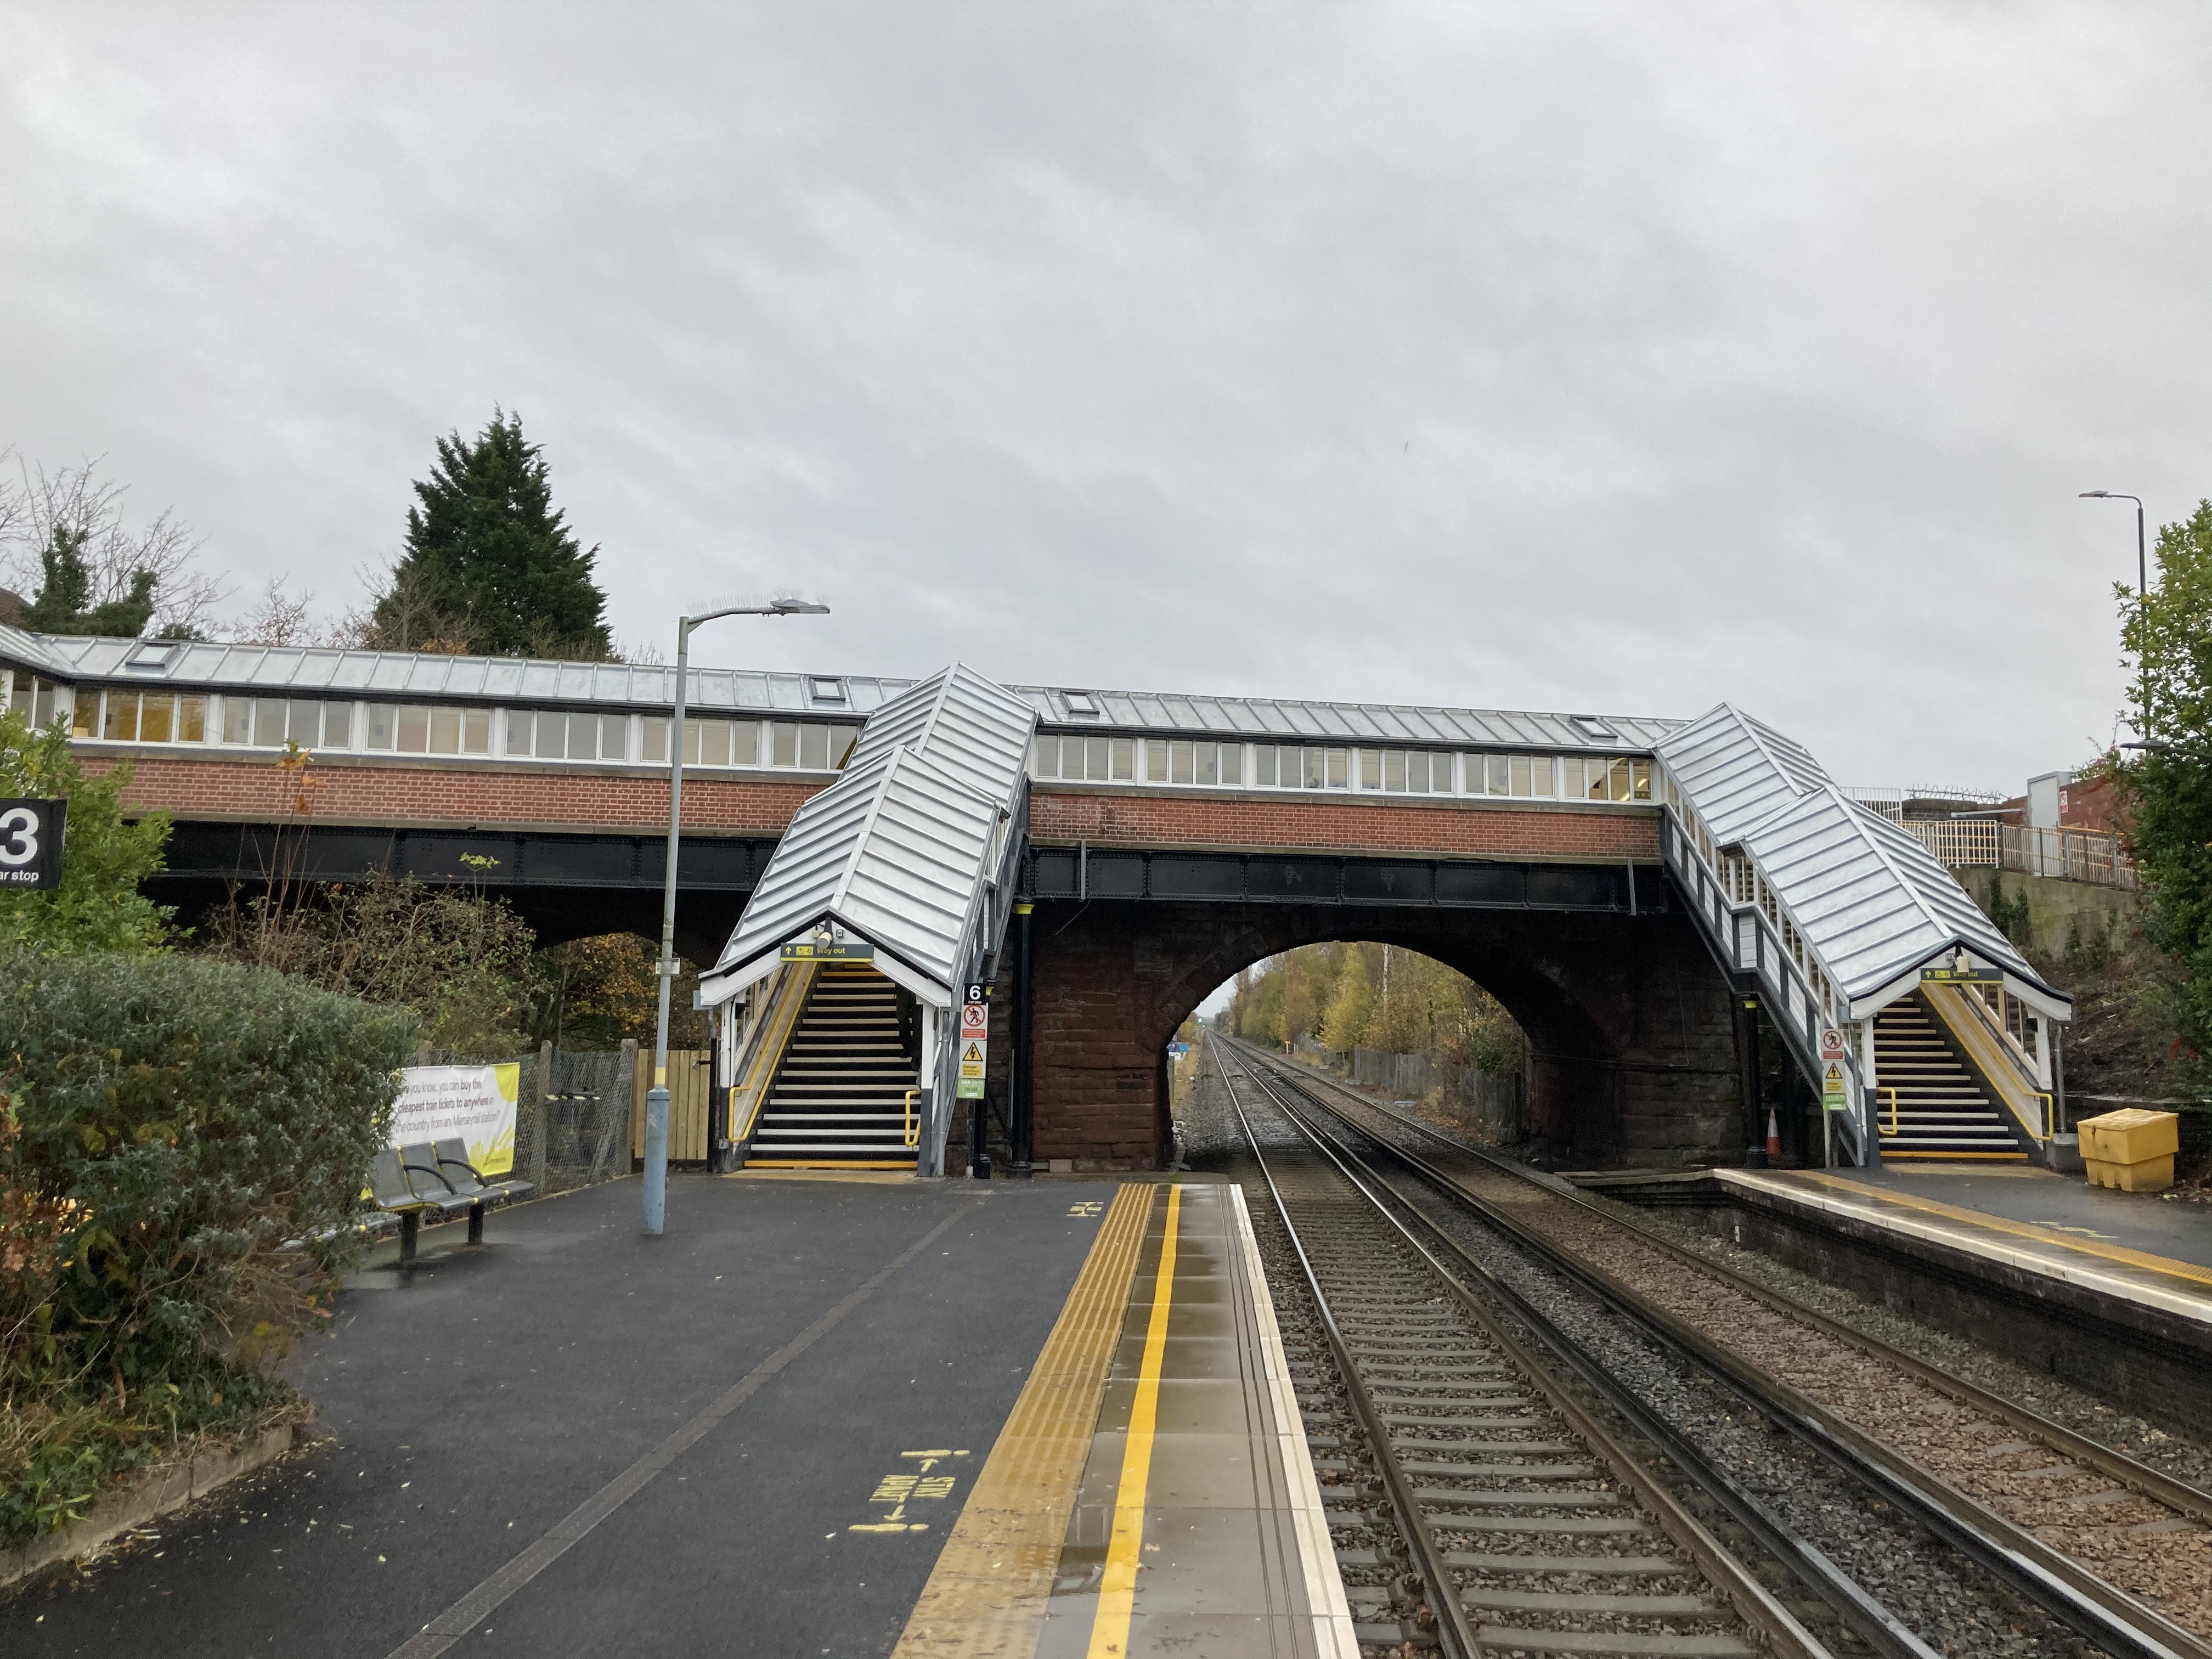 Bromborough Station footbridge from the outside platform view